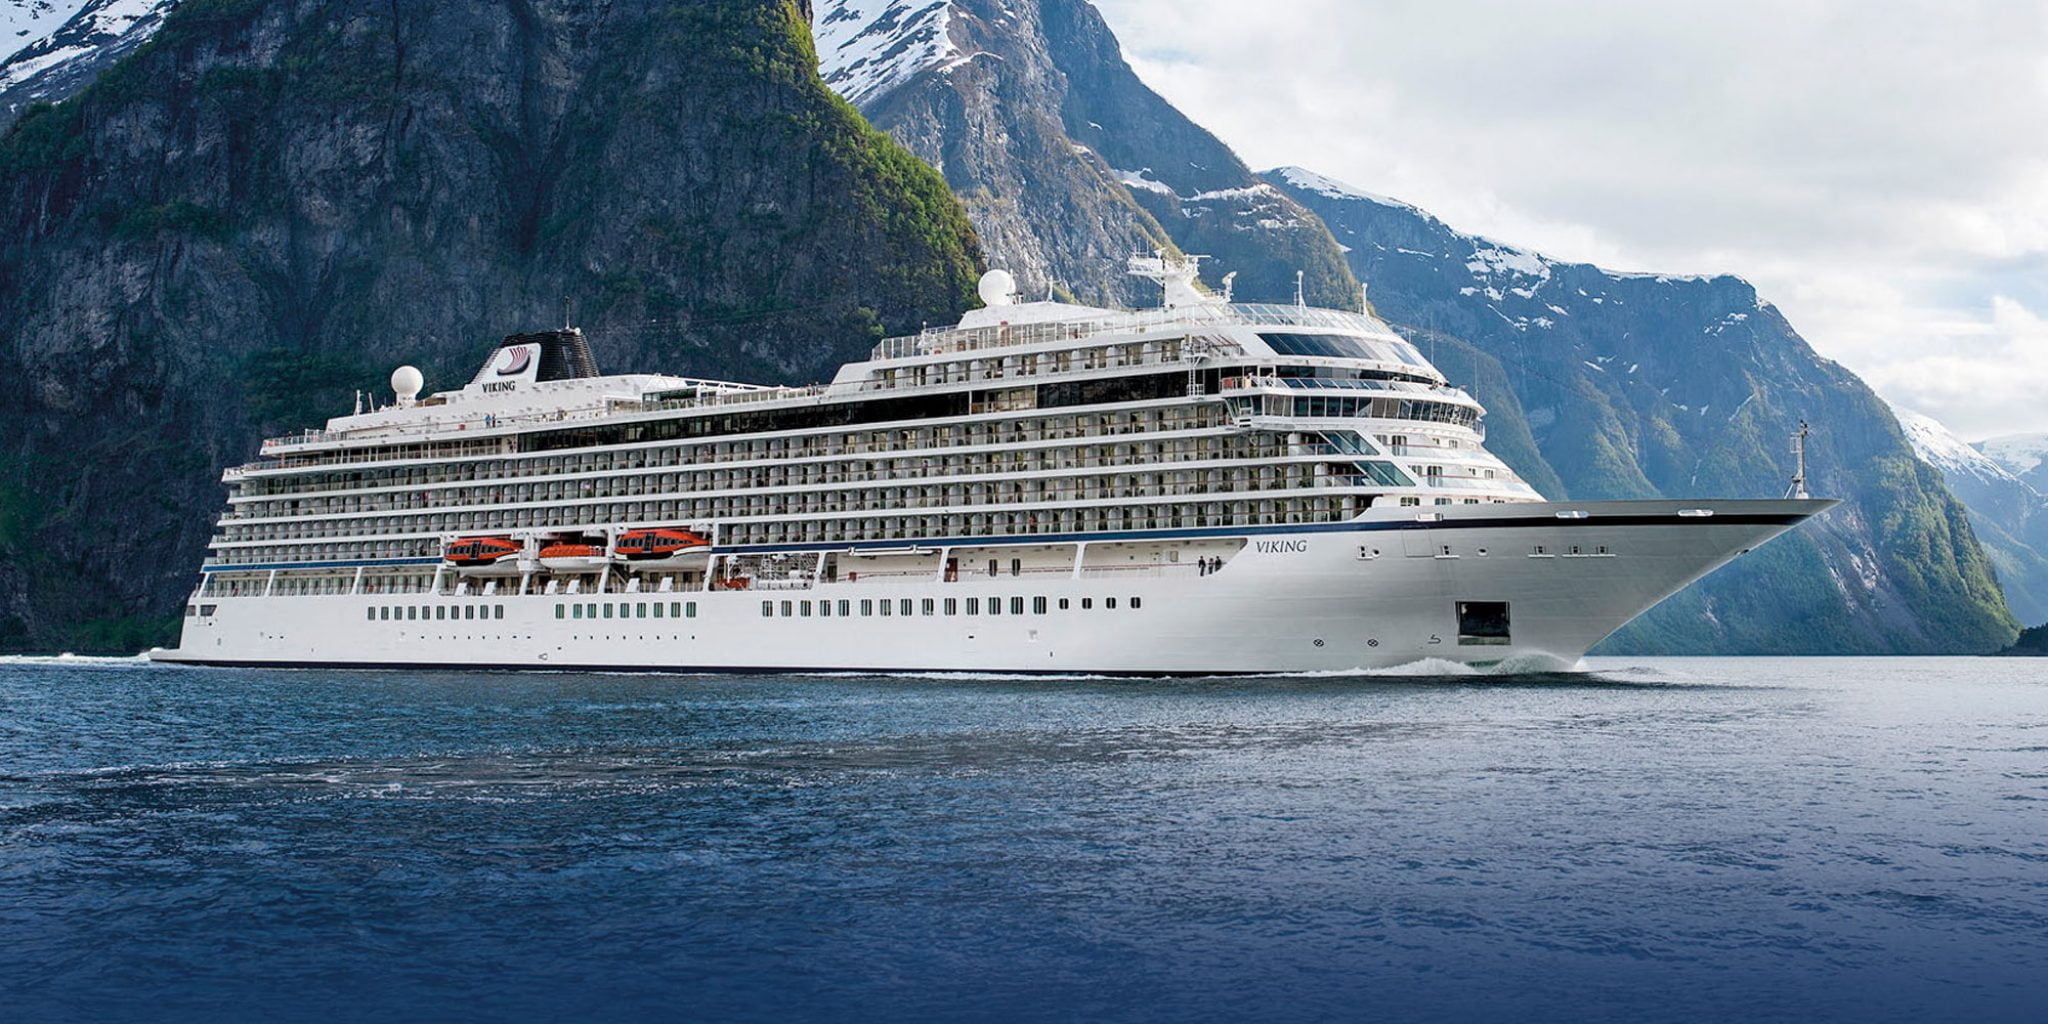 viking homelands cruise reviews 2022